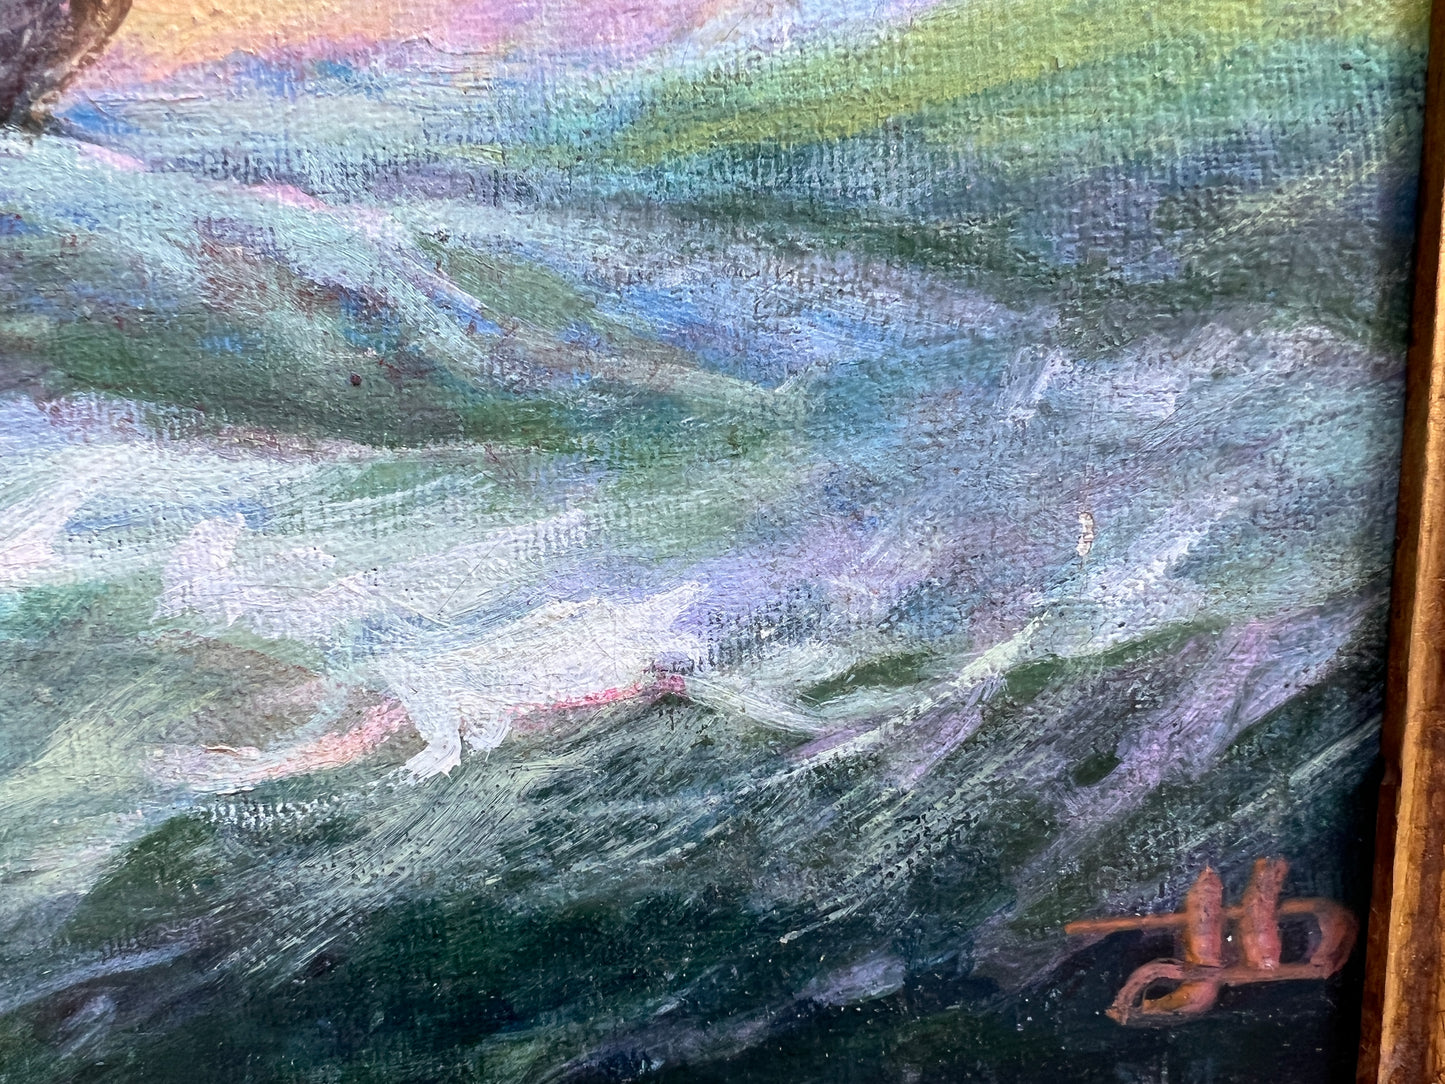 Artist Dobritsin Oil painting on canvas, seascape, "Through the Storm" Framed